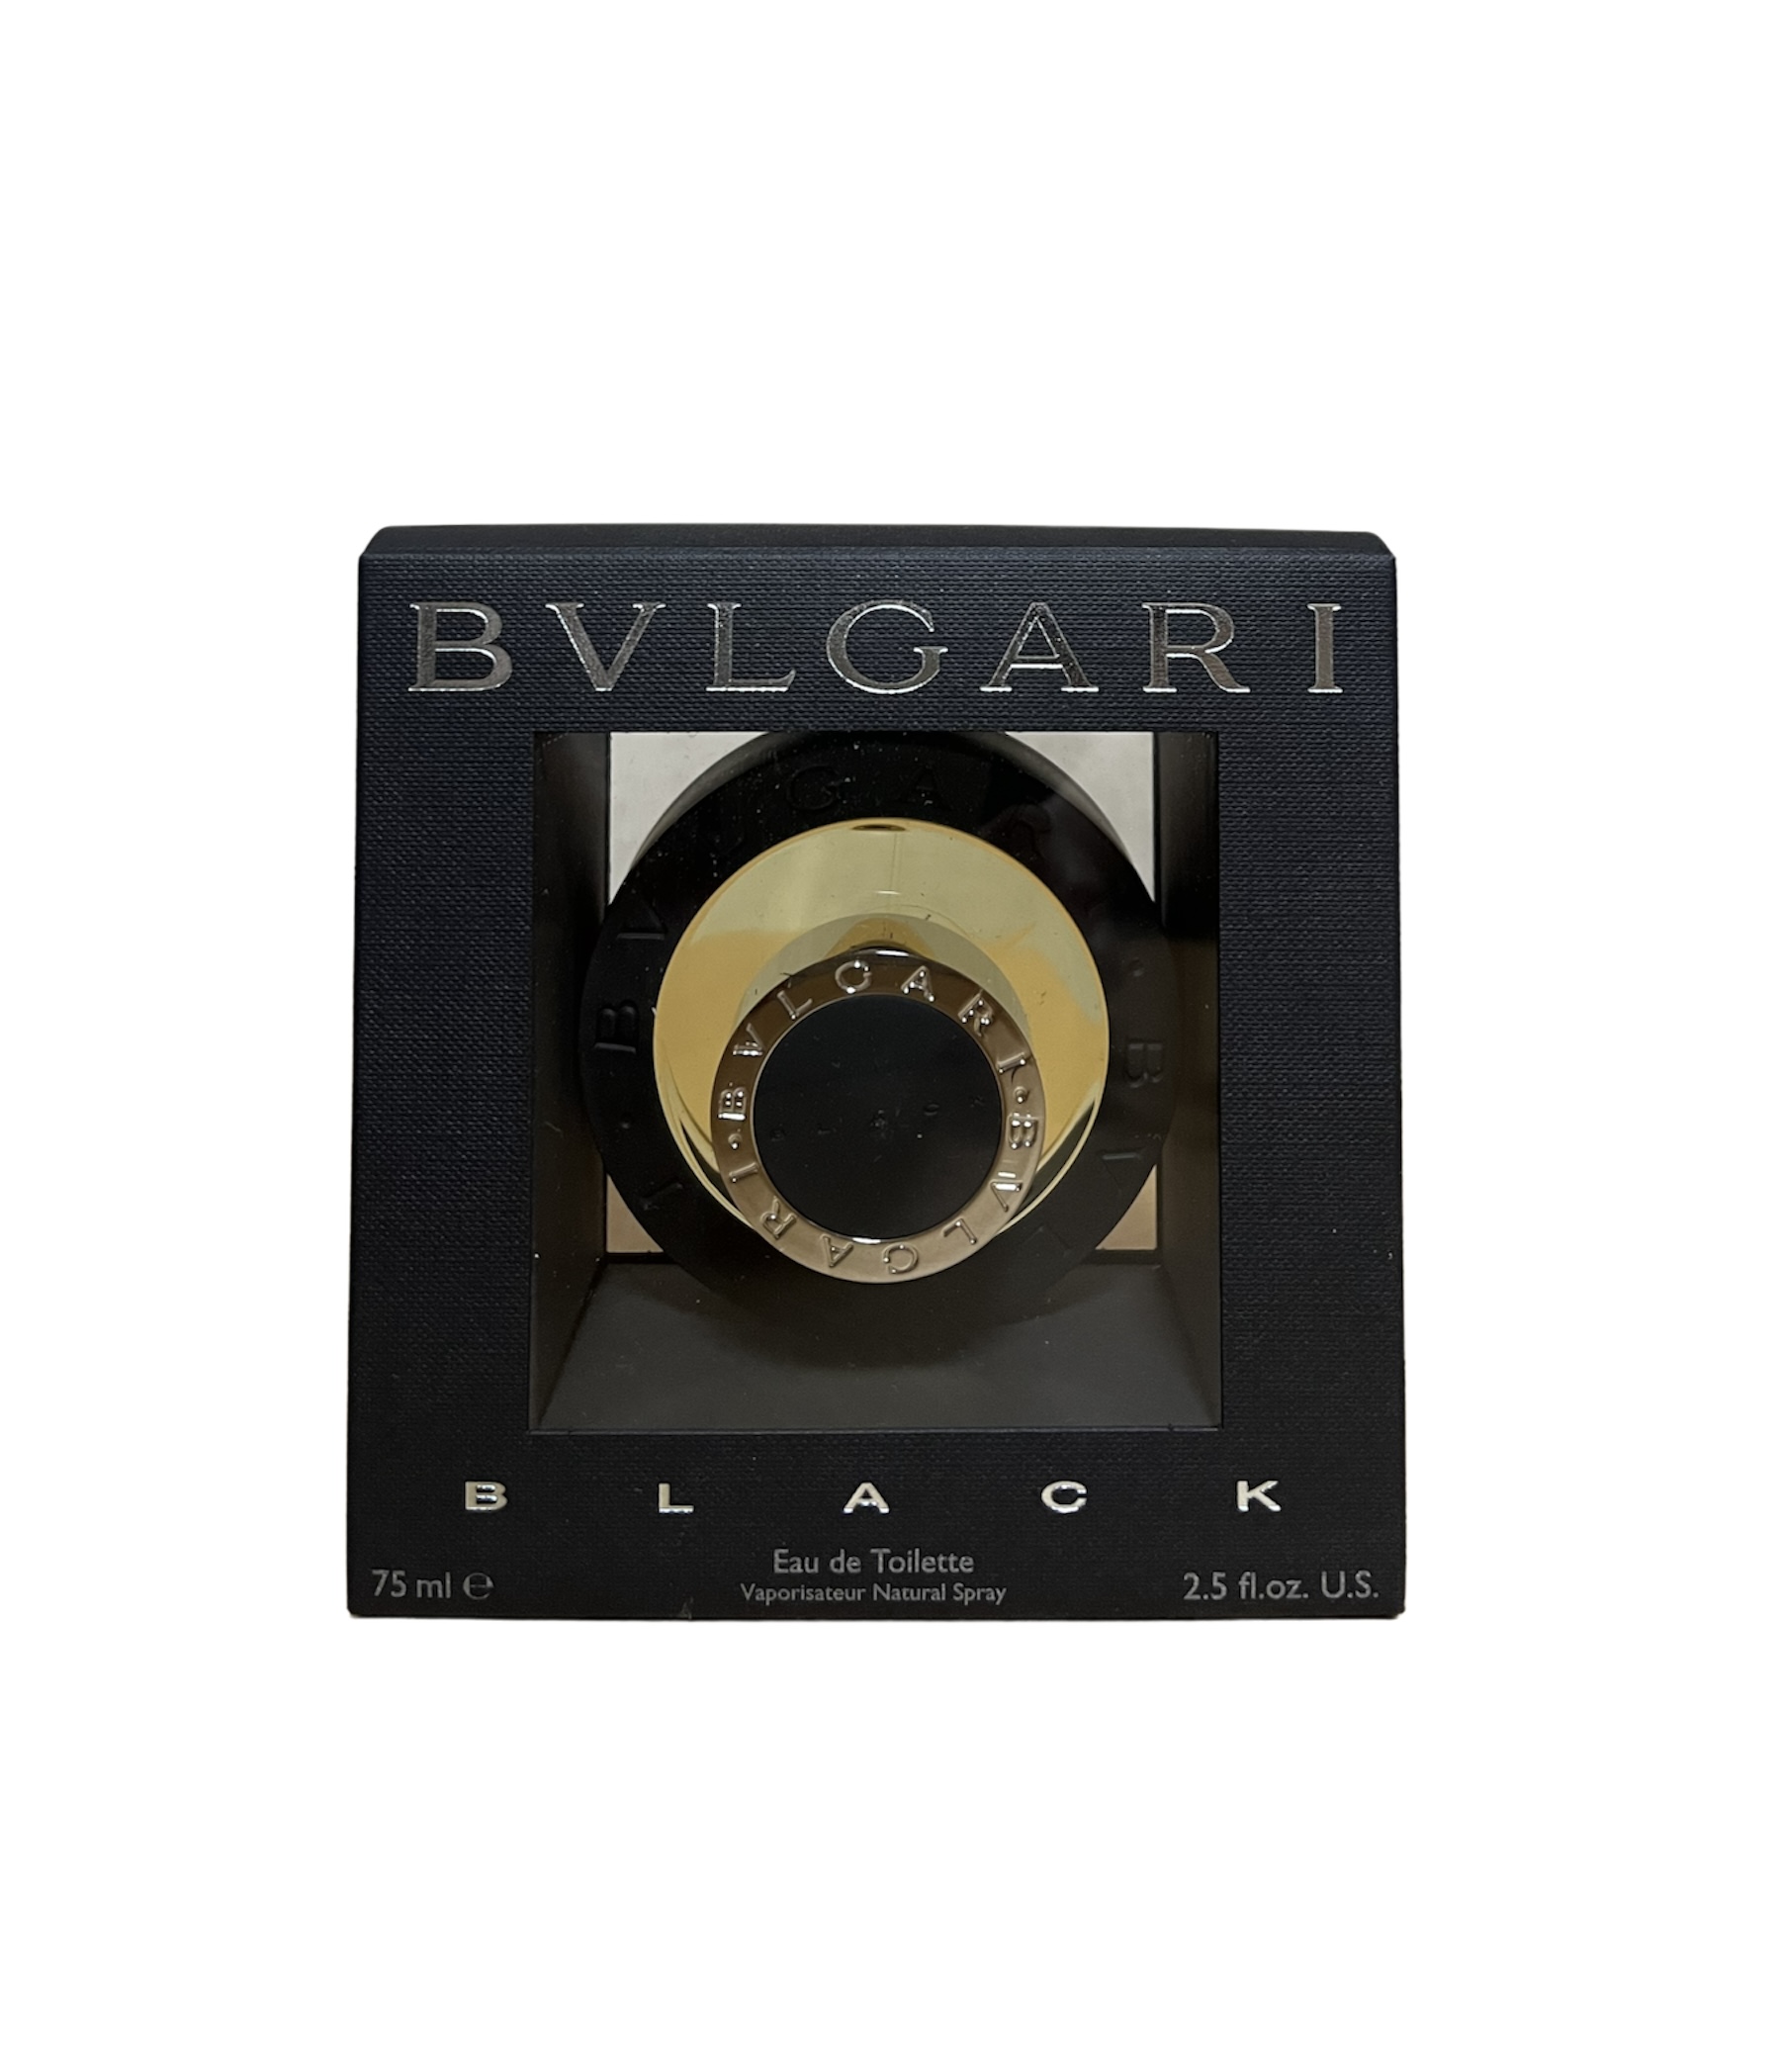 Bvlgari - Black Eau de Toilette 75ml